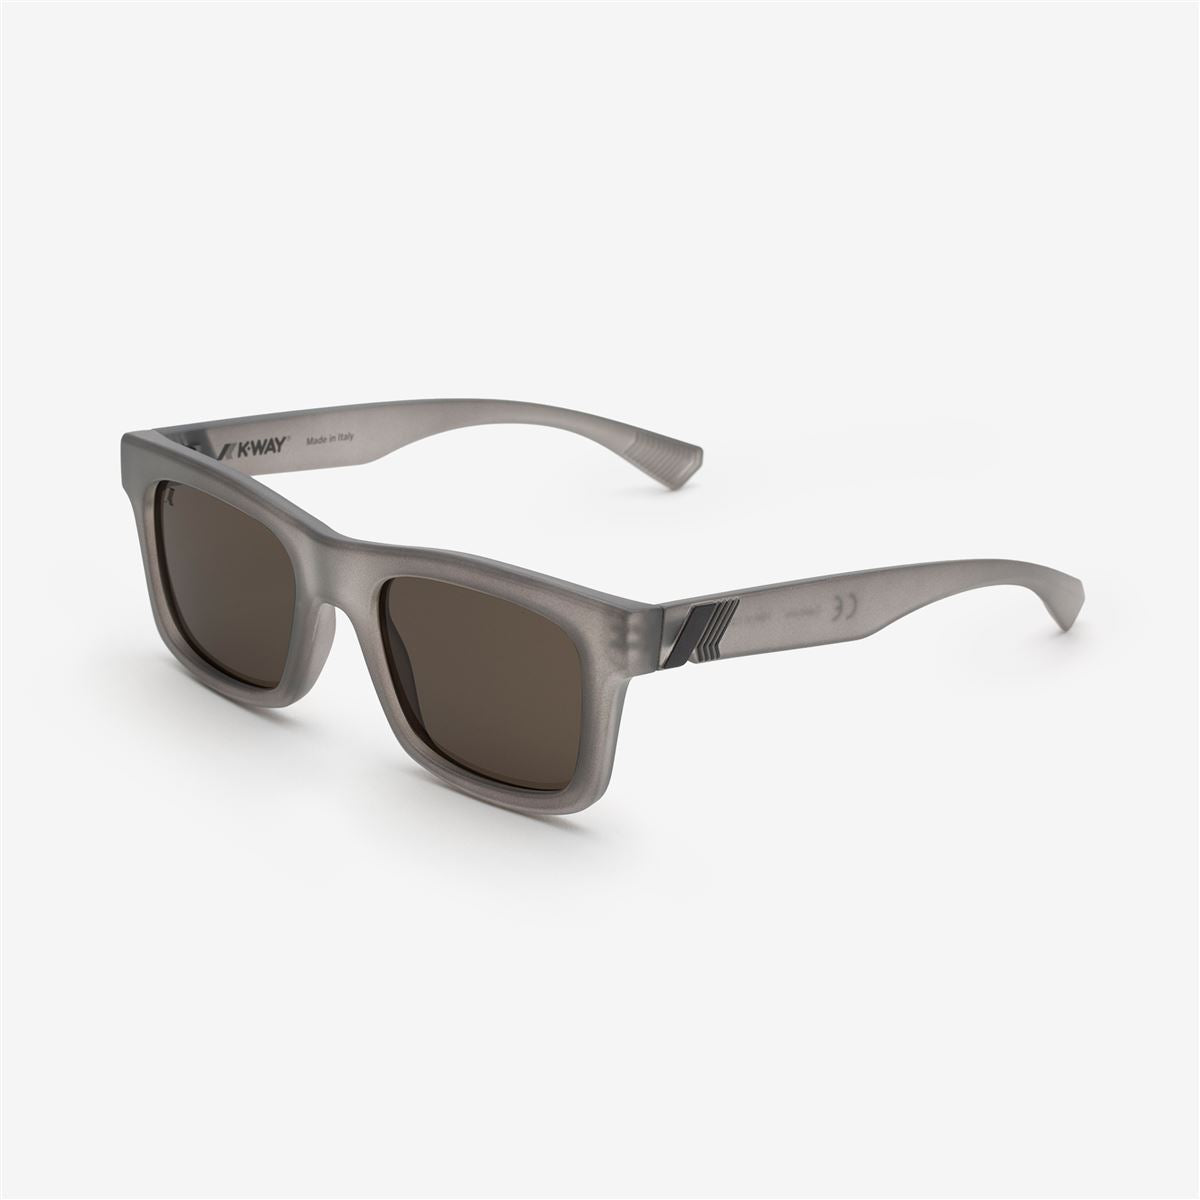 CAPITAINE - Glasses - Sunglasses - Man - Gray